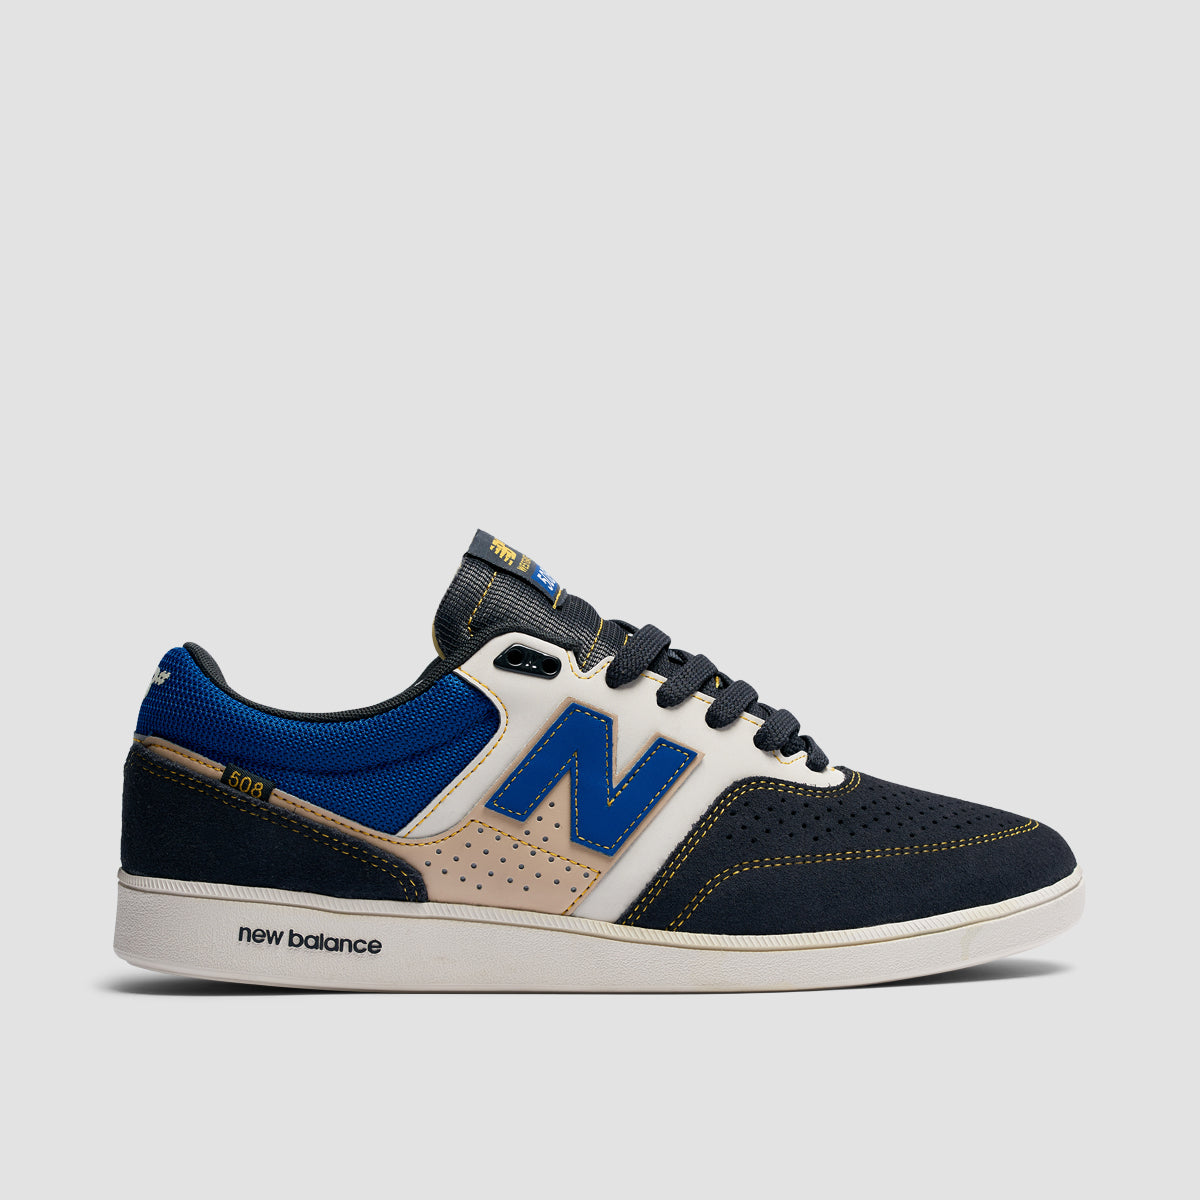 New Balance Numerice Brandon Westgate 508 Shoes - Navy/Royal Blue